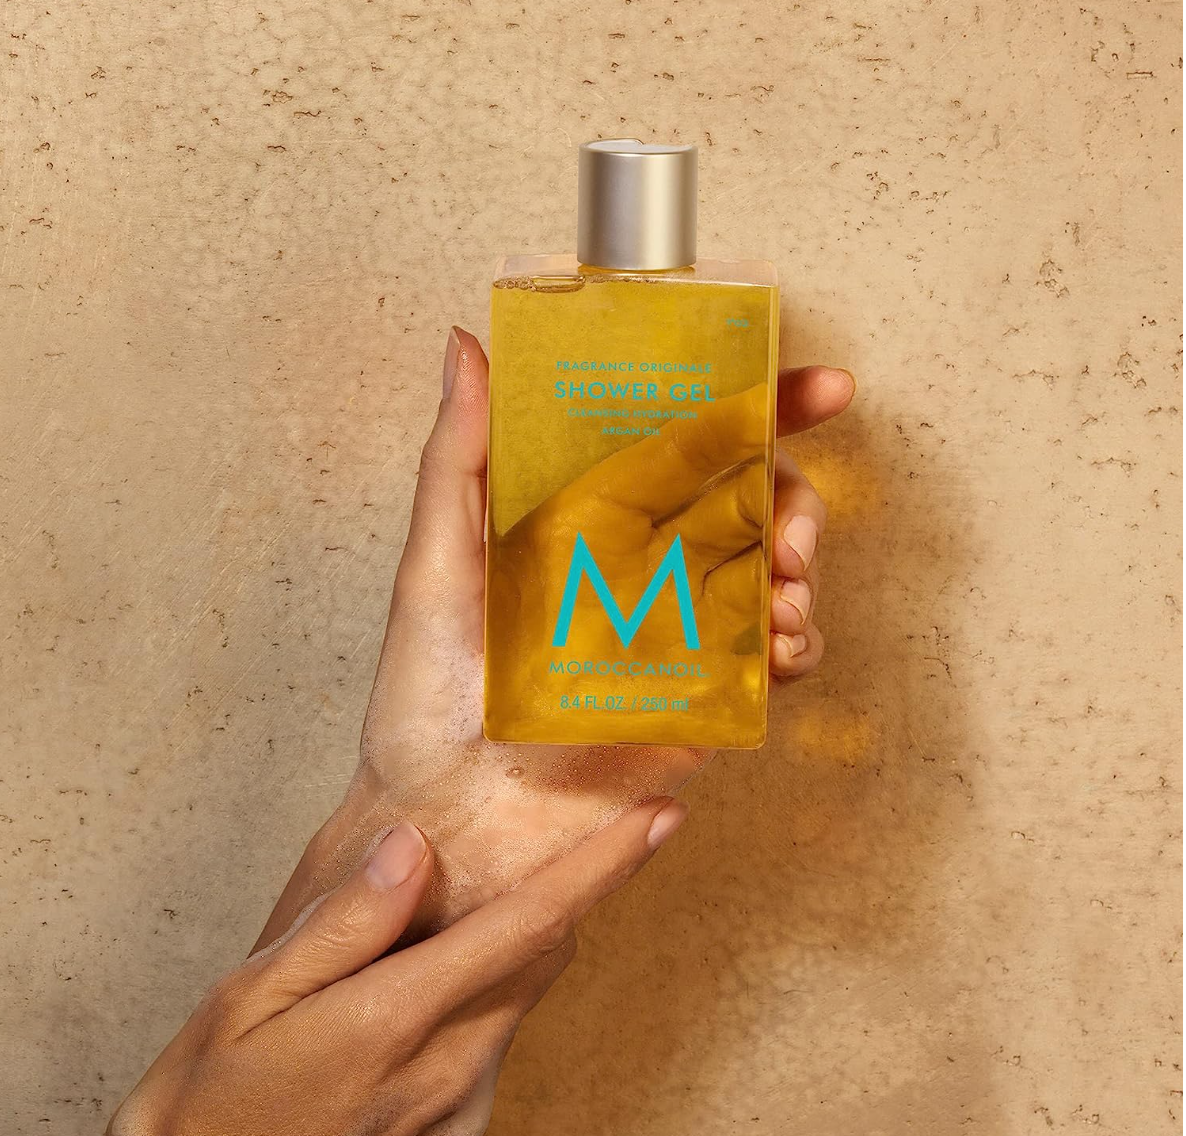 Moroccanoil Shower Gel Body Wash Oud Mineral